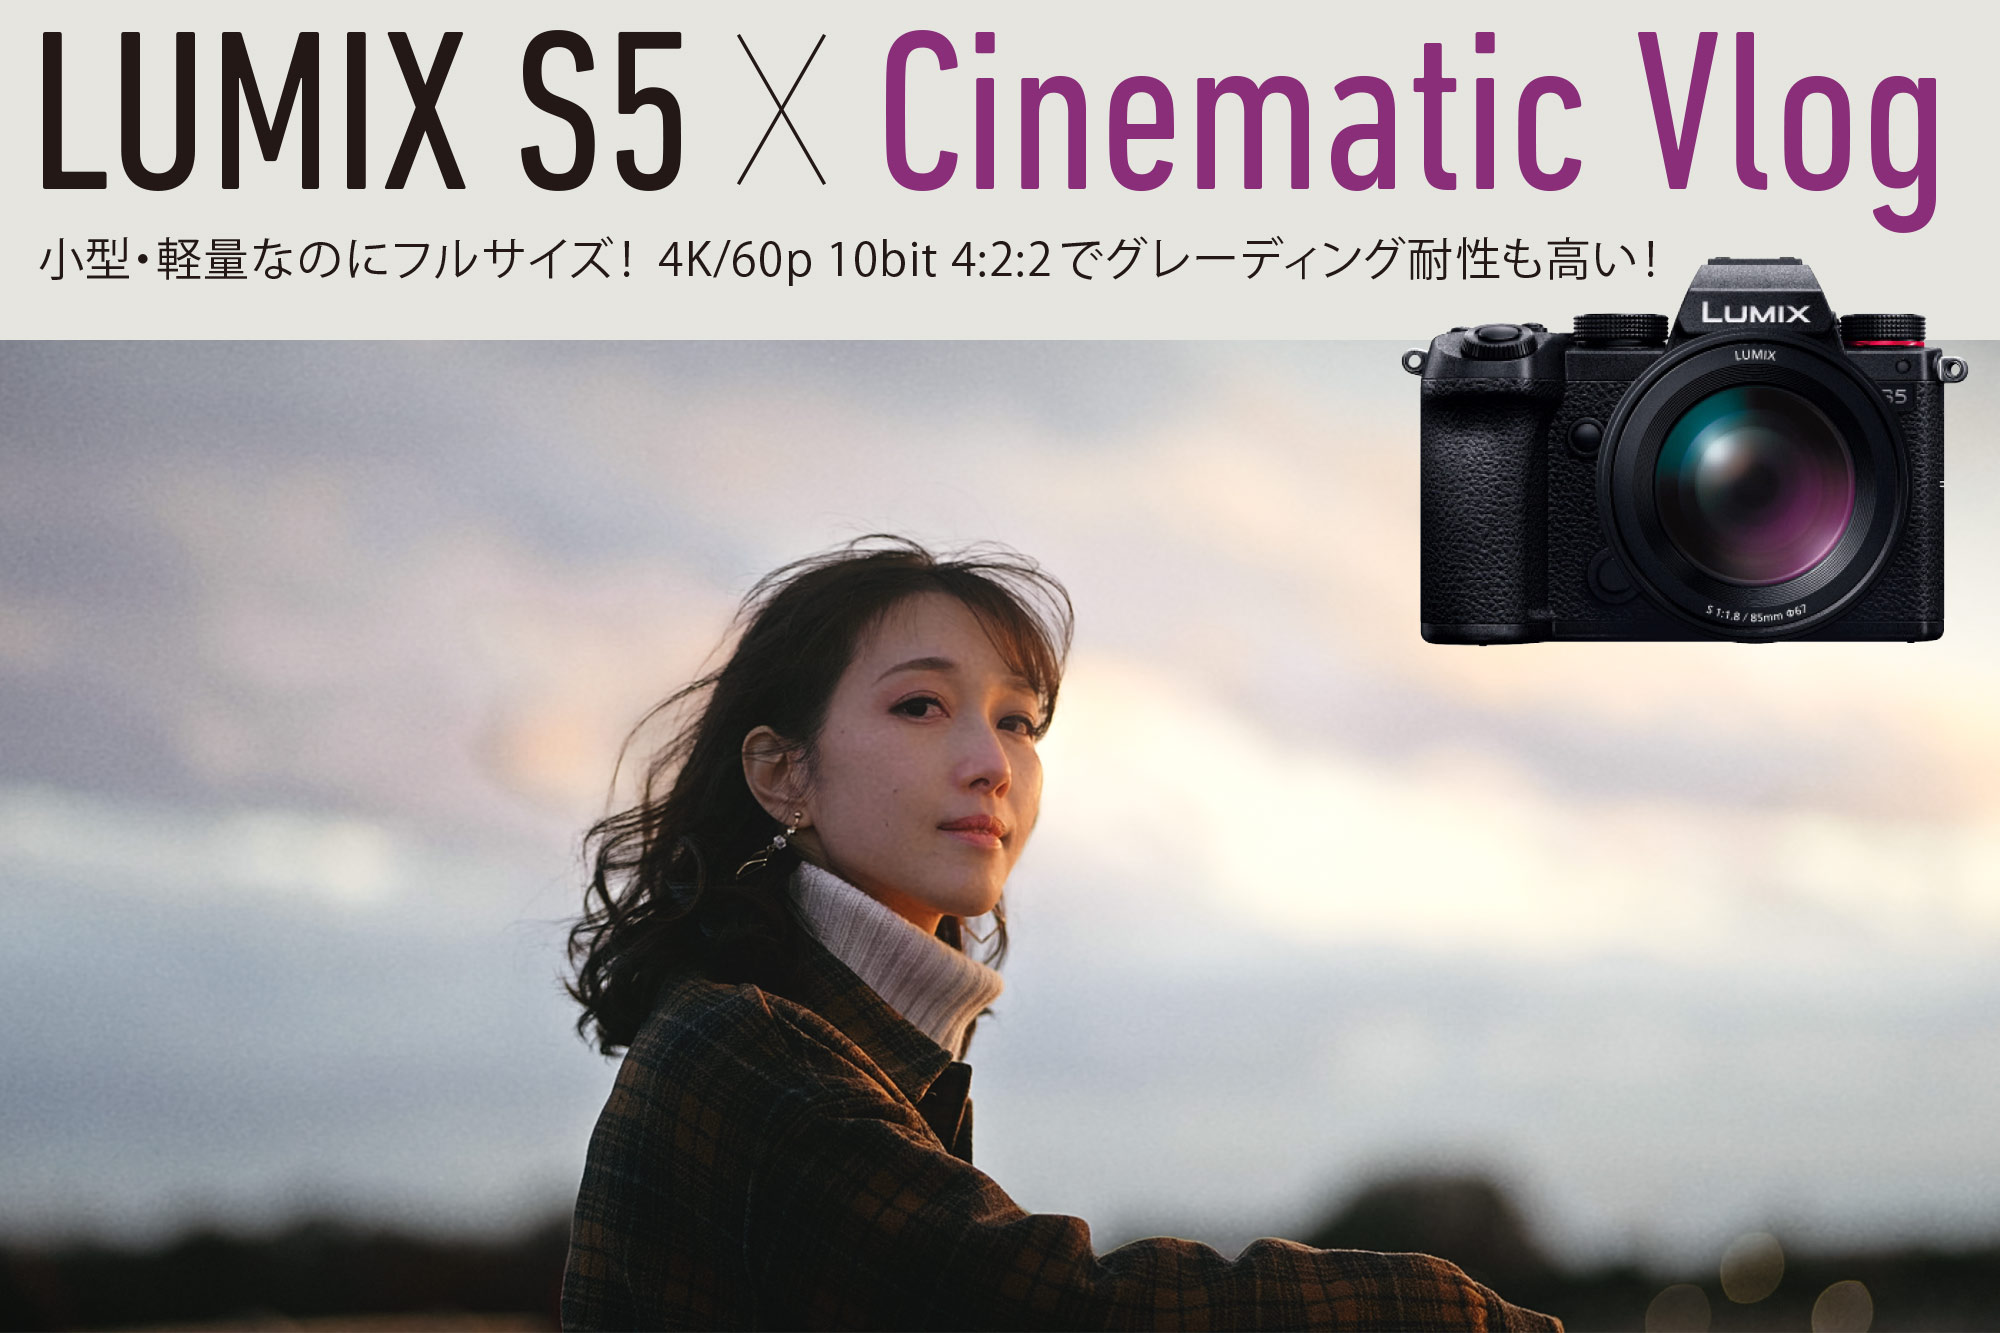 LUMIX S5 ×Cinematic Vlog〜小型・軽量なのにフルサイズ! 4K/60p 10bit